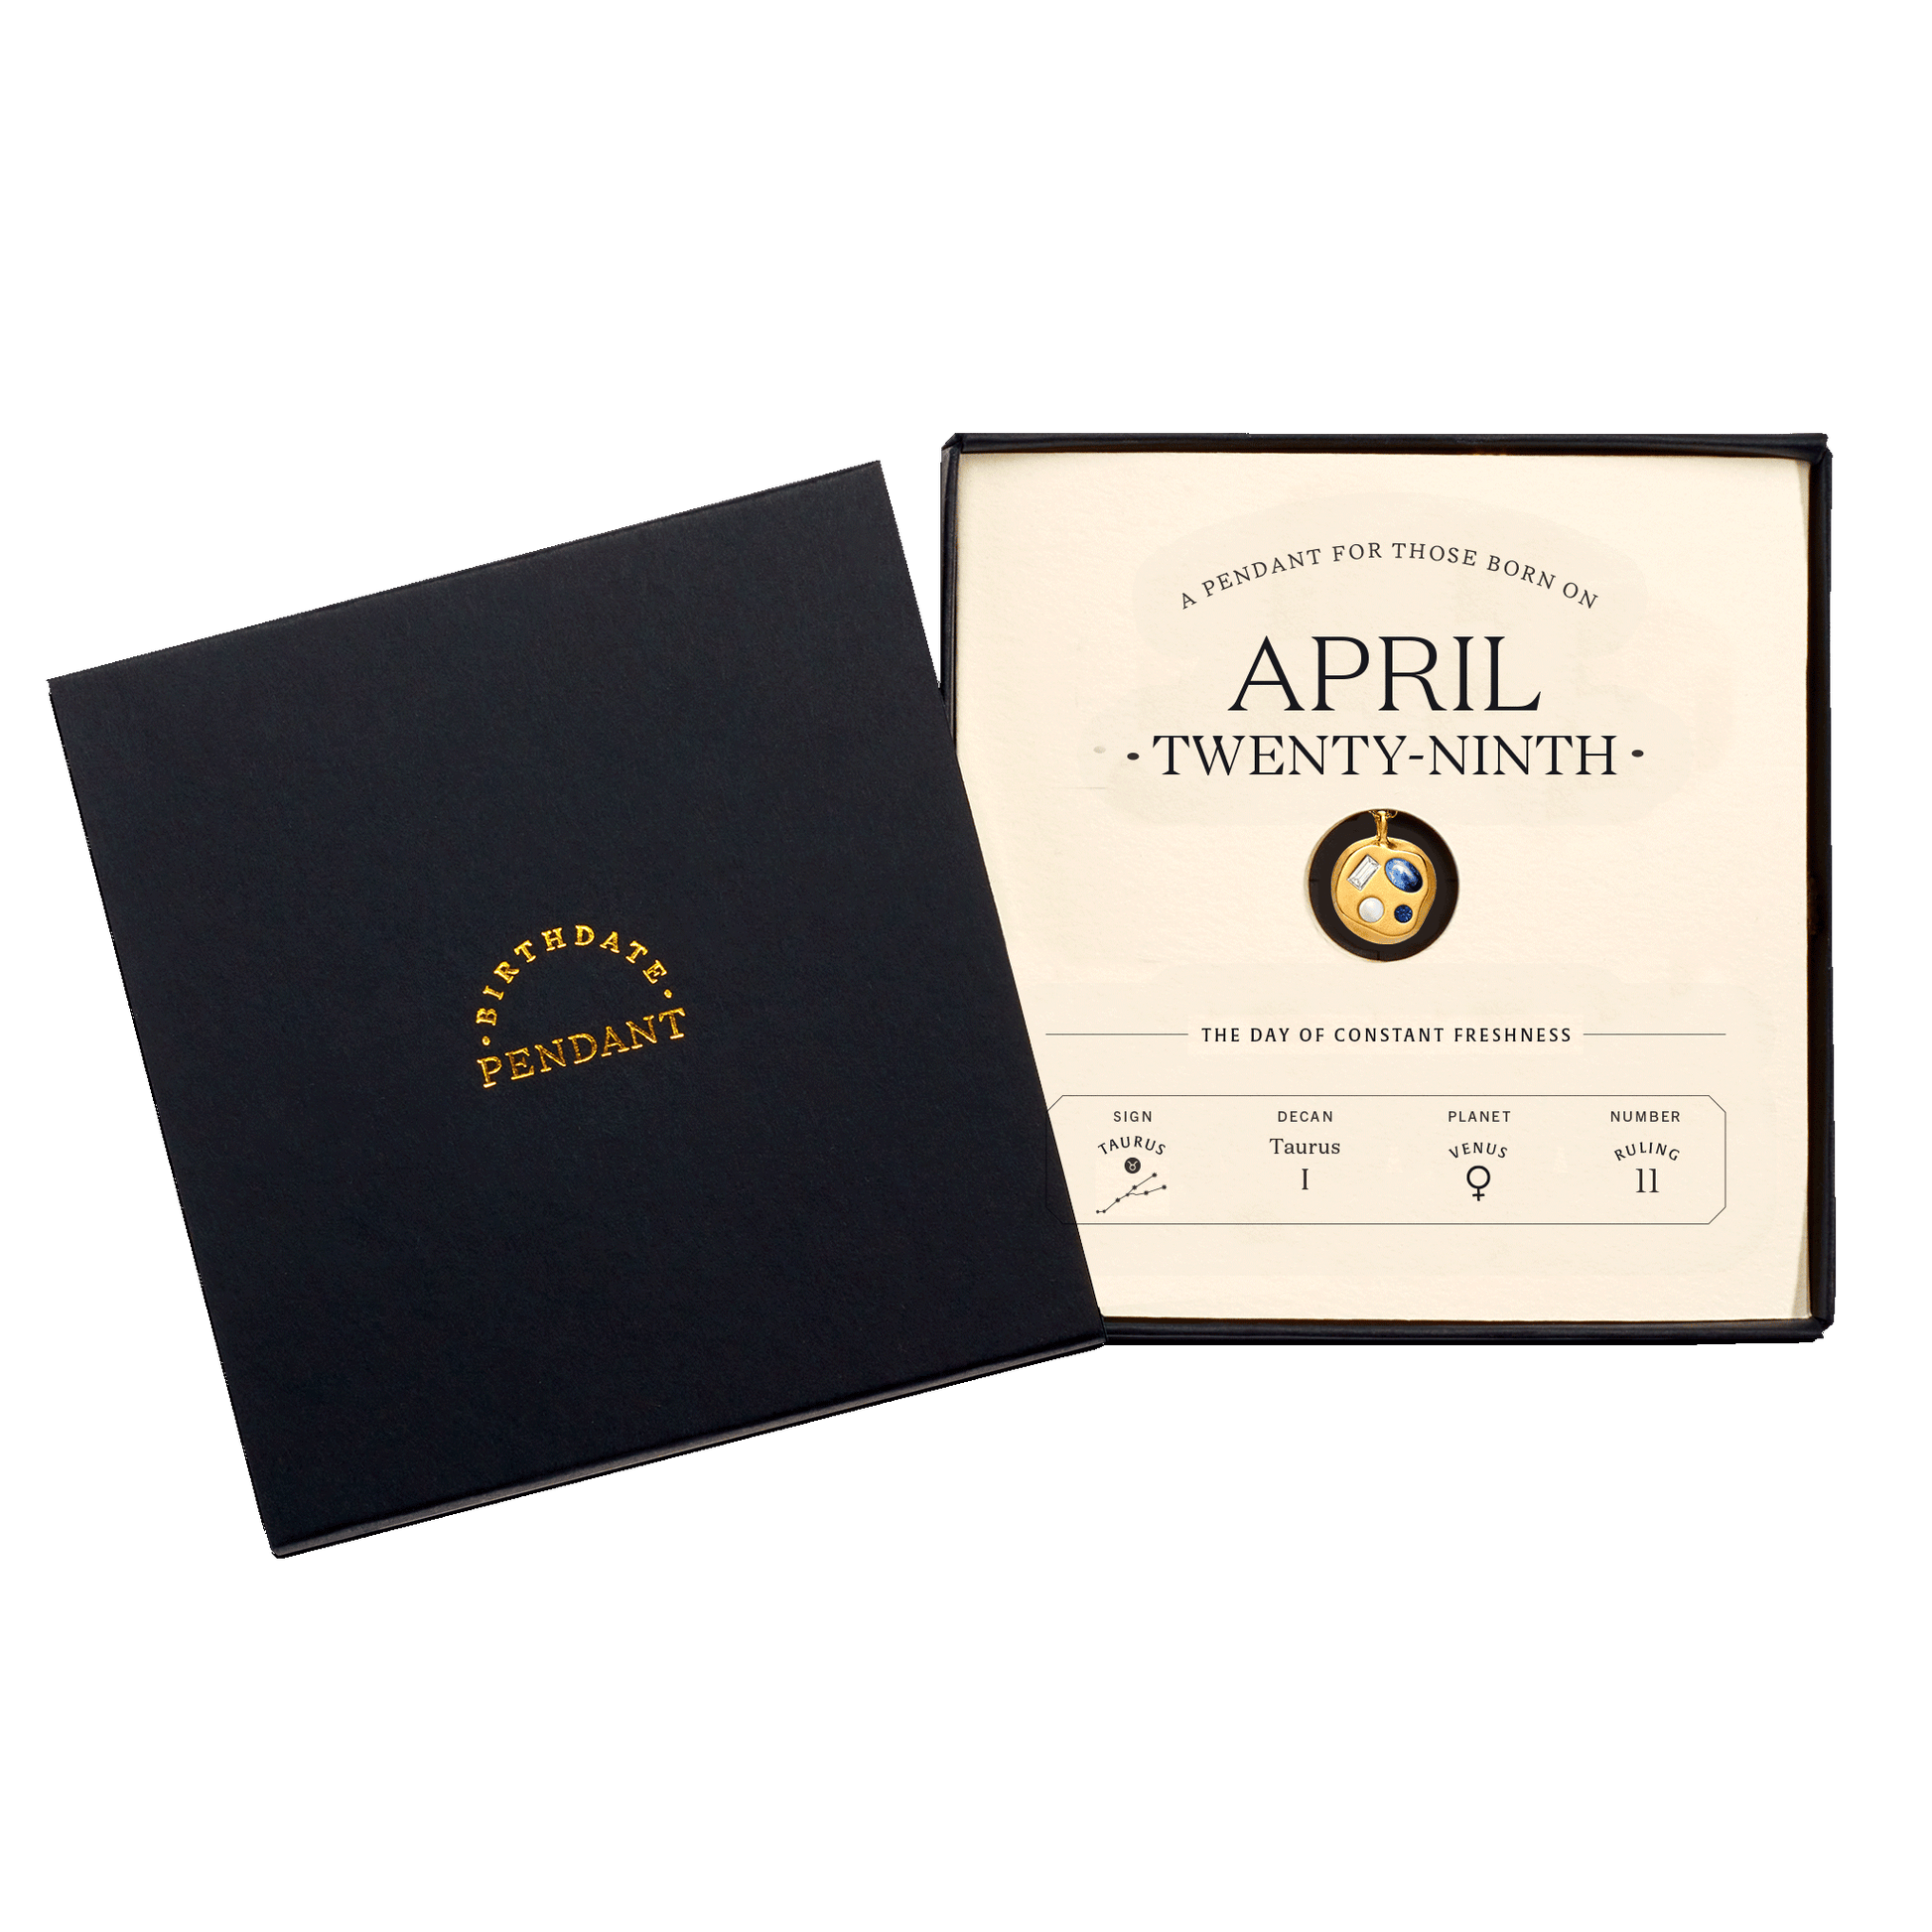 The April Twenty-Ninth Pendant inside its box